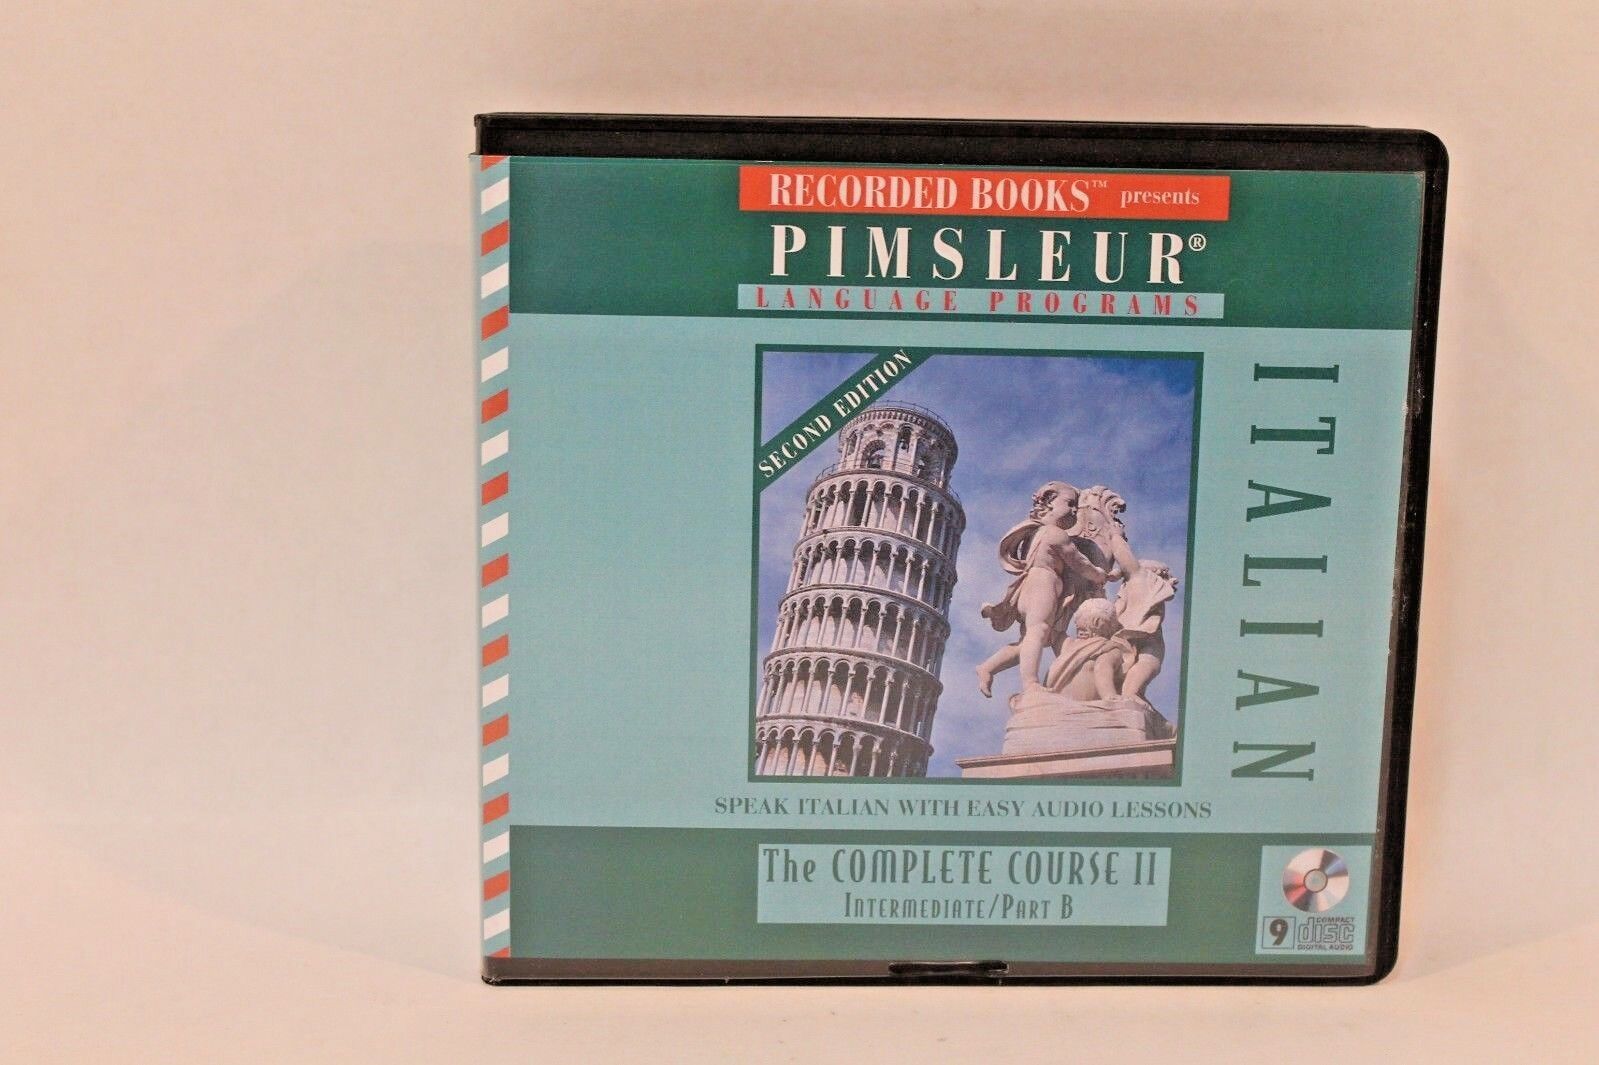 Pimsleur Italian: The Complete Course II / Intermediate / Part B